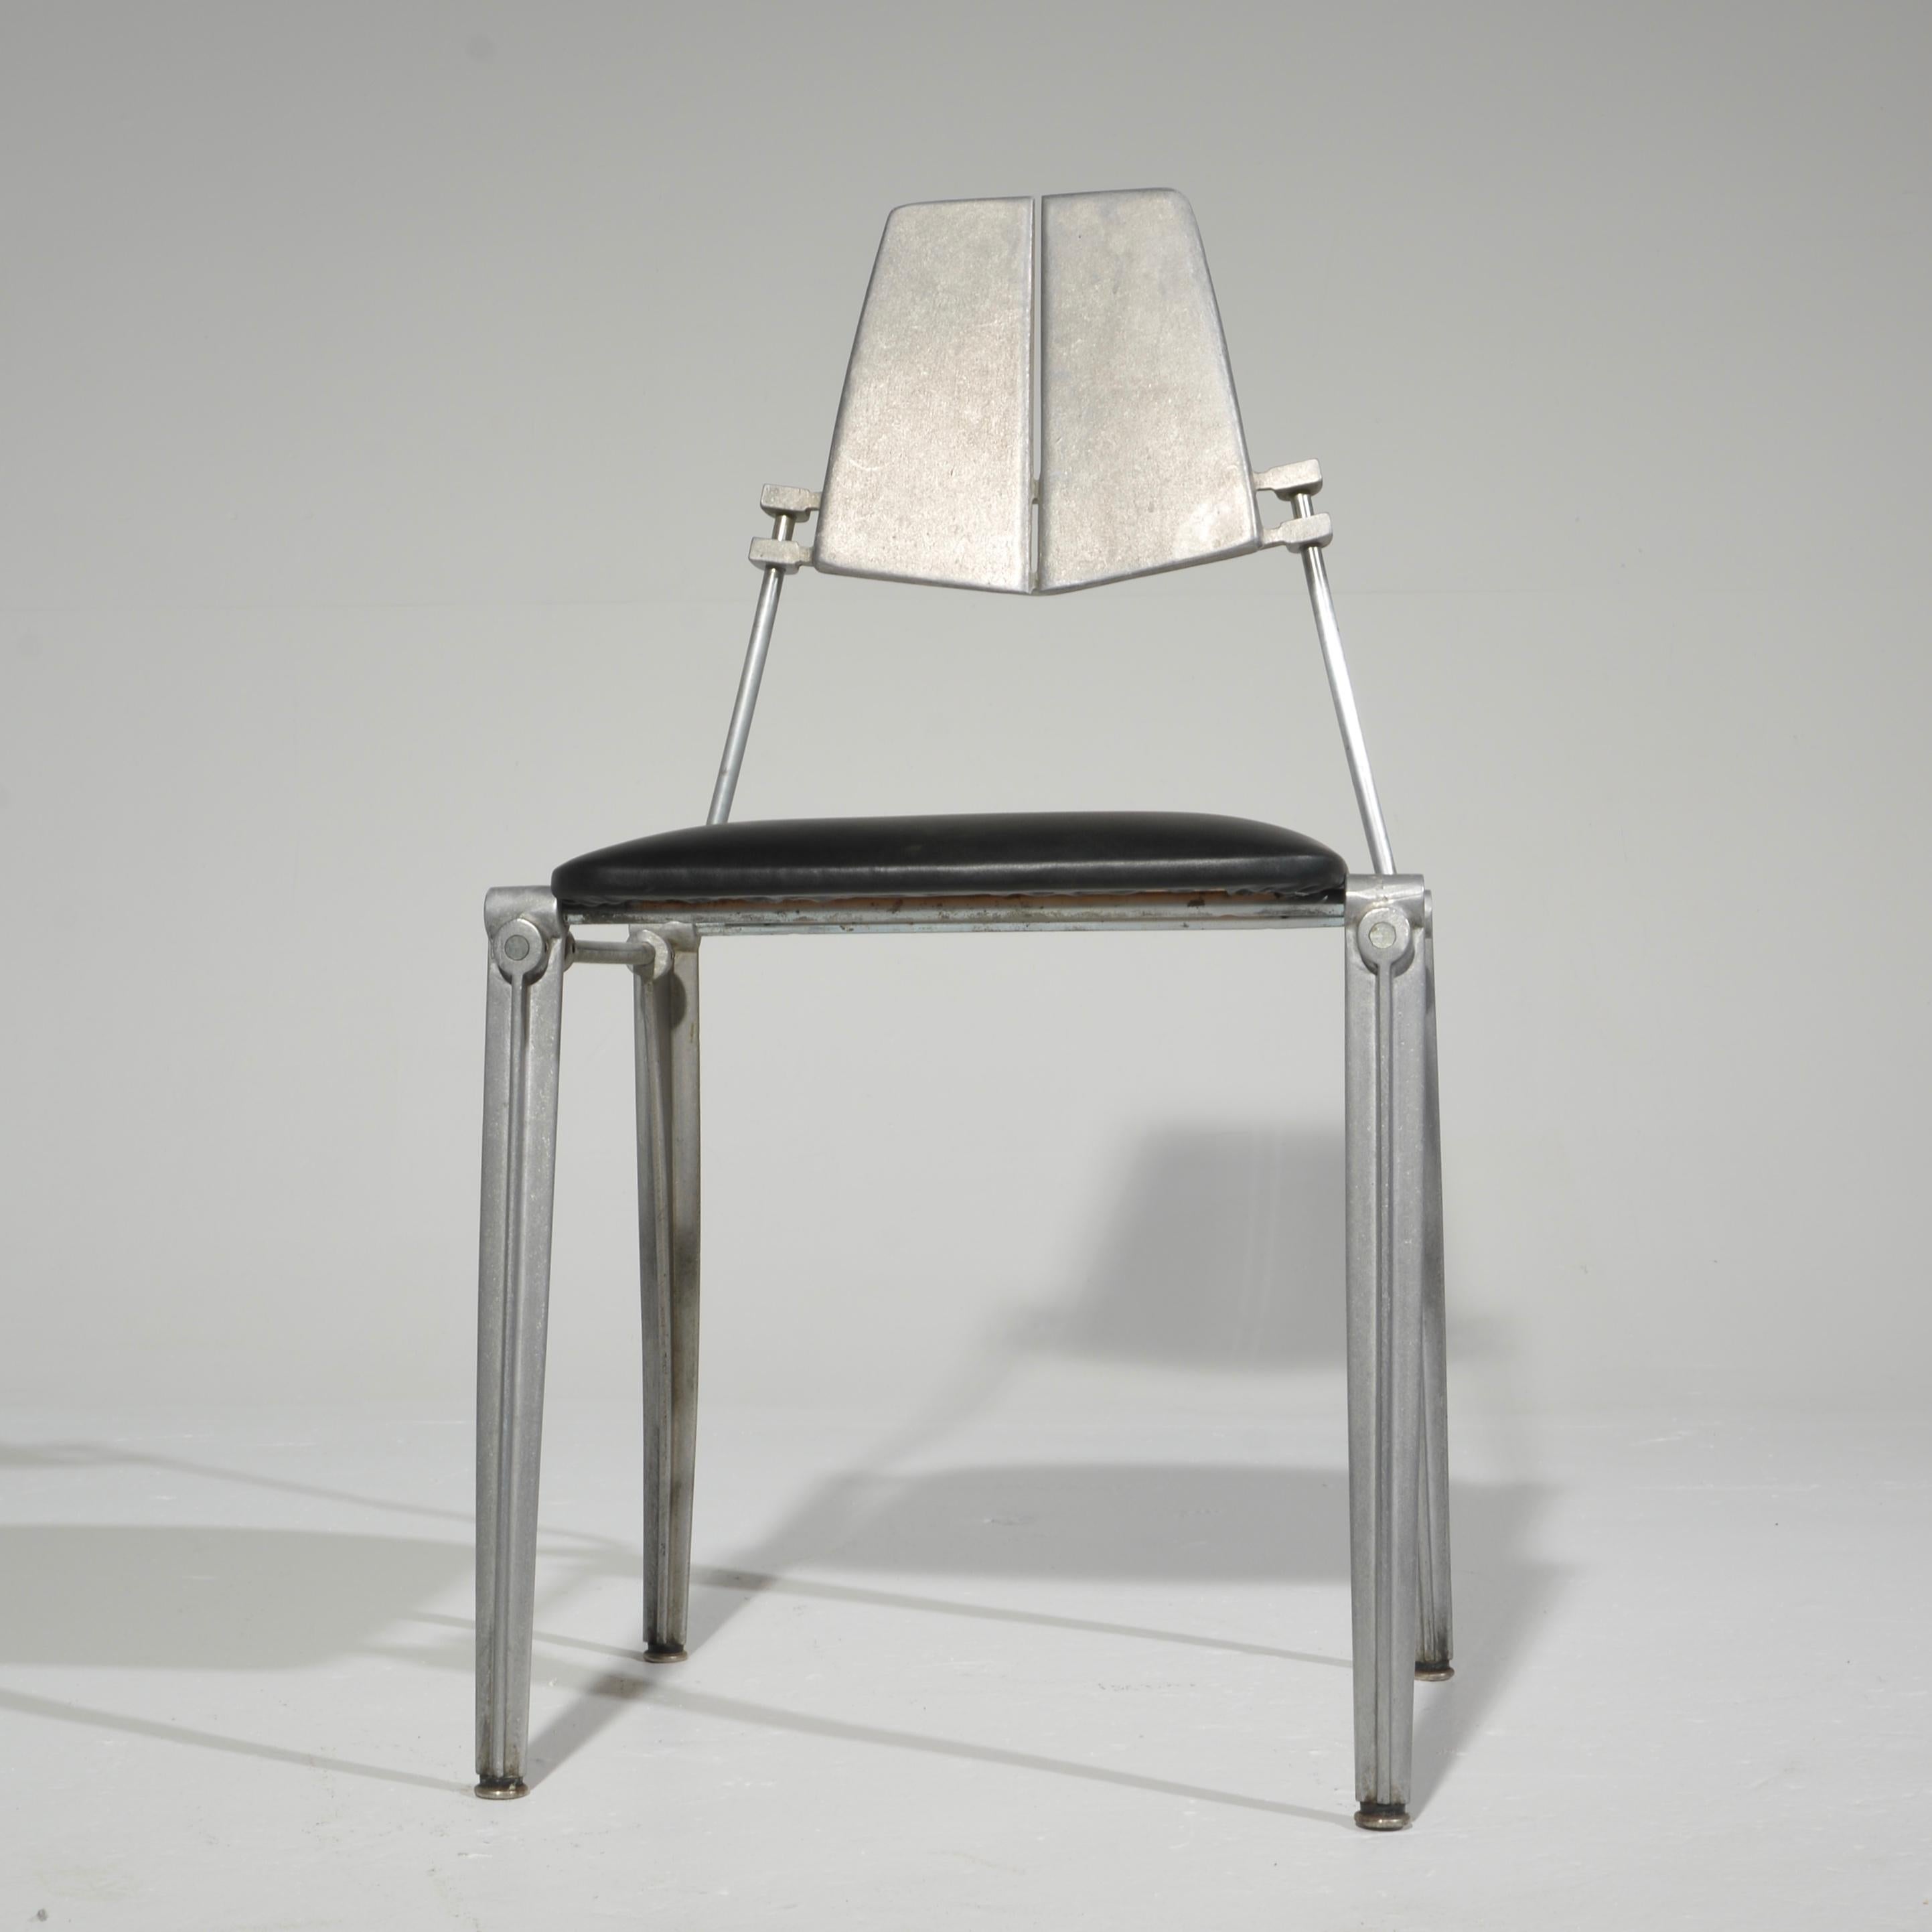 Robert Josten cast aluminum dining chair upholstered in black vinyl. 